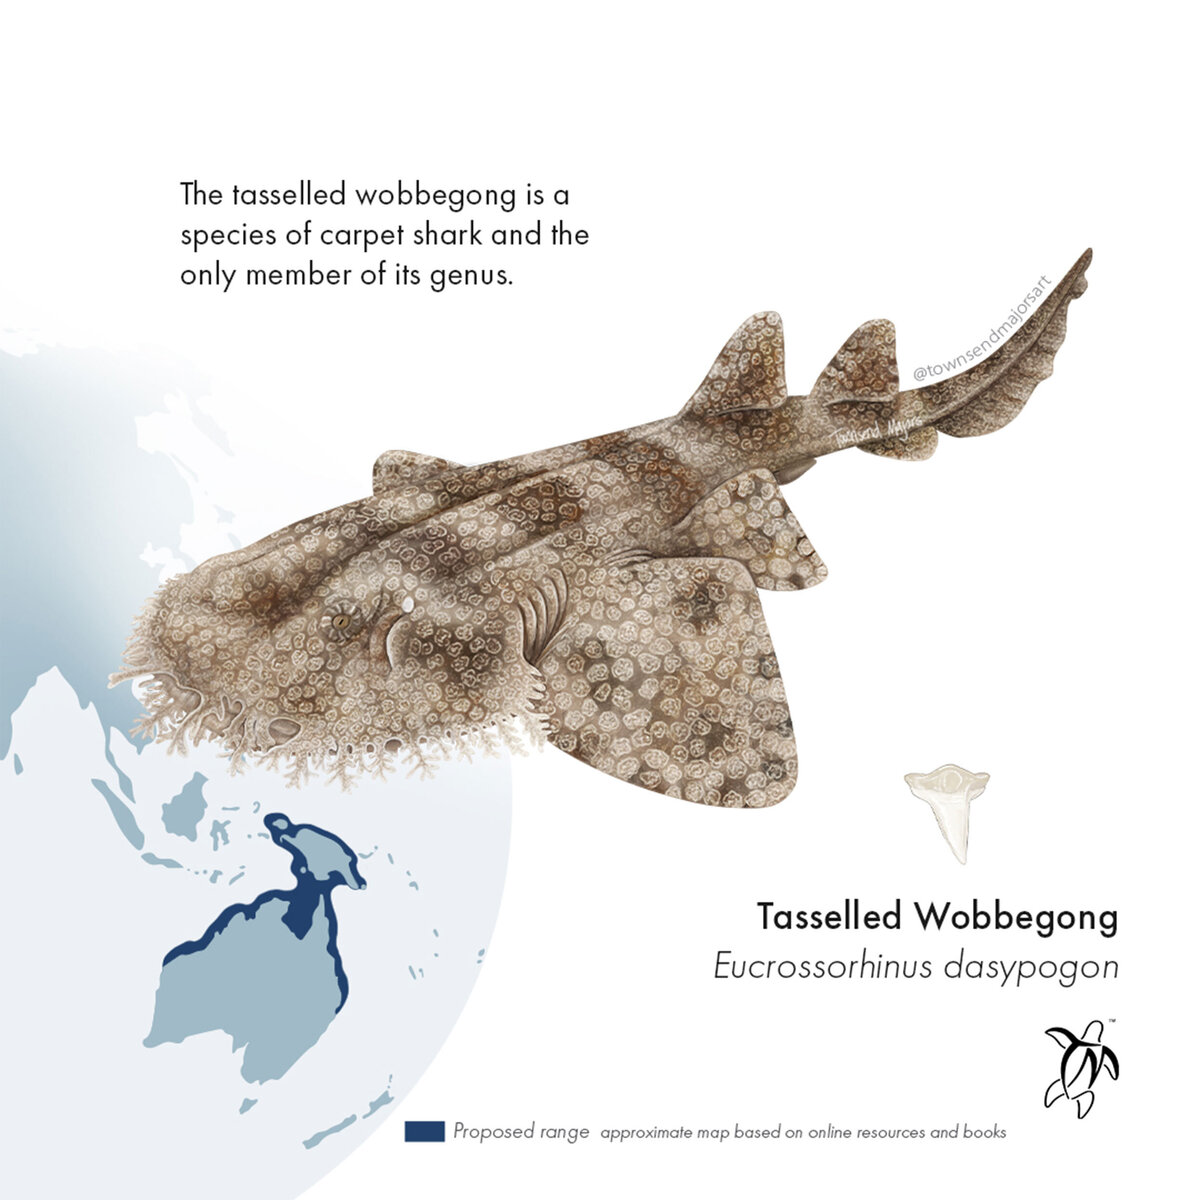 Townsend Majors' tasselled wobbegong shark scientific illustration infographic